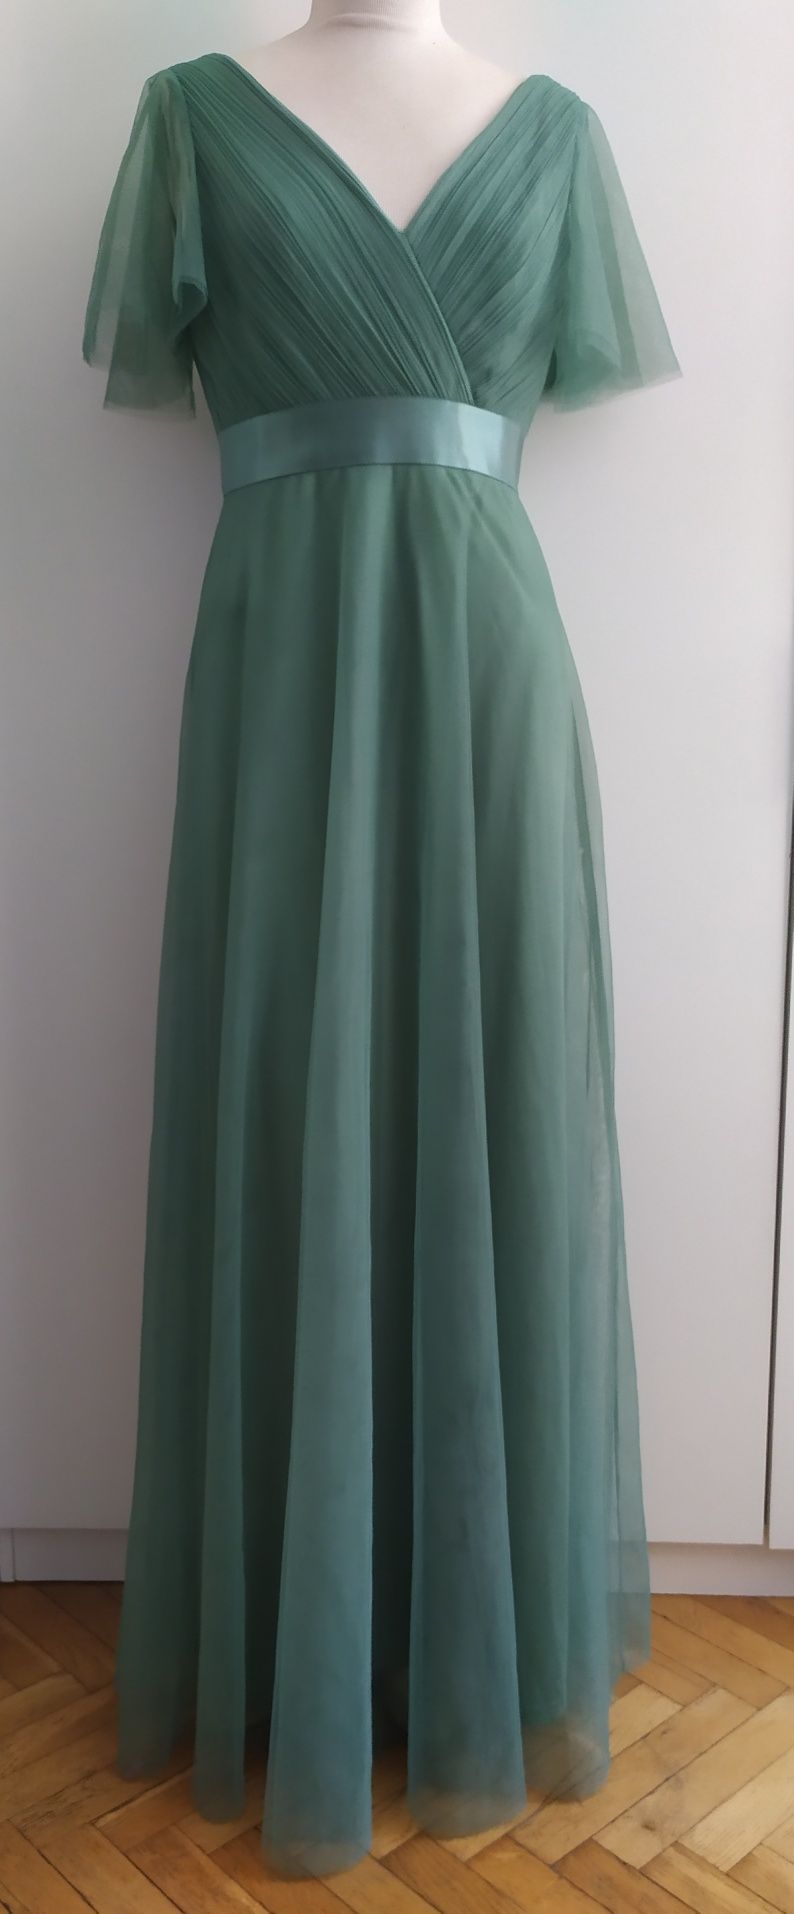 Sukienka maxi długa tiulowa zielona wesele